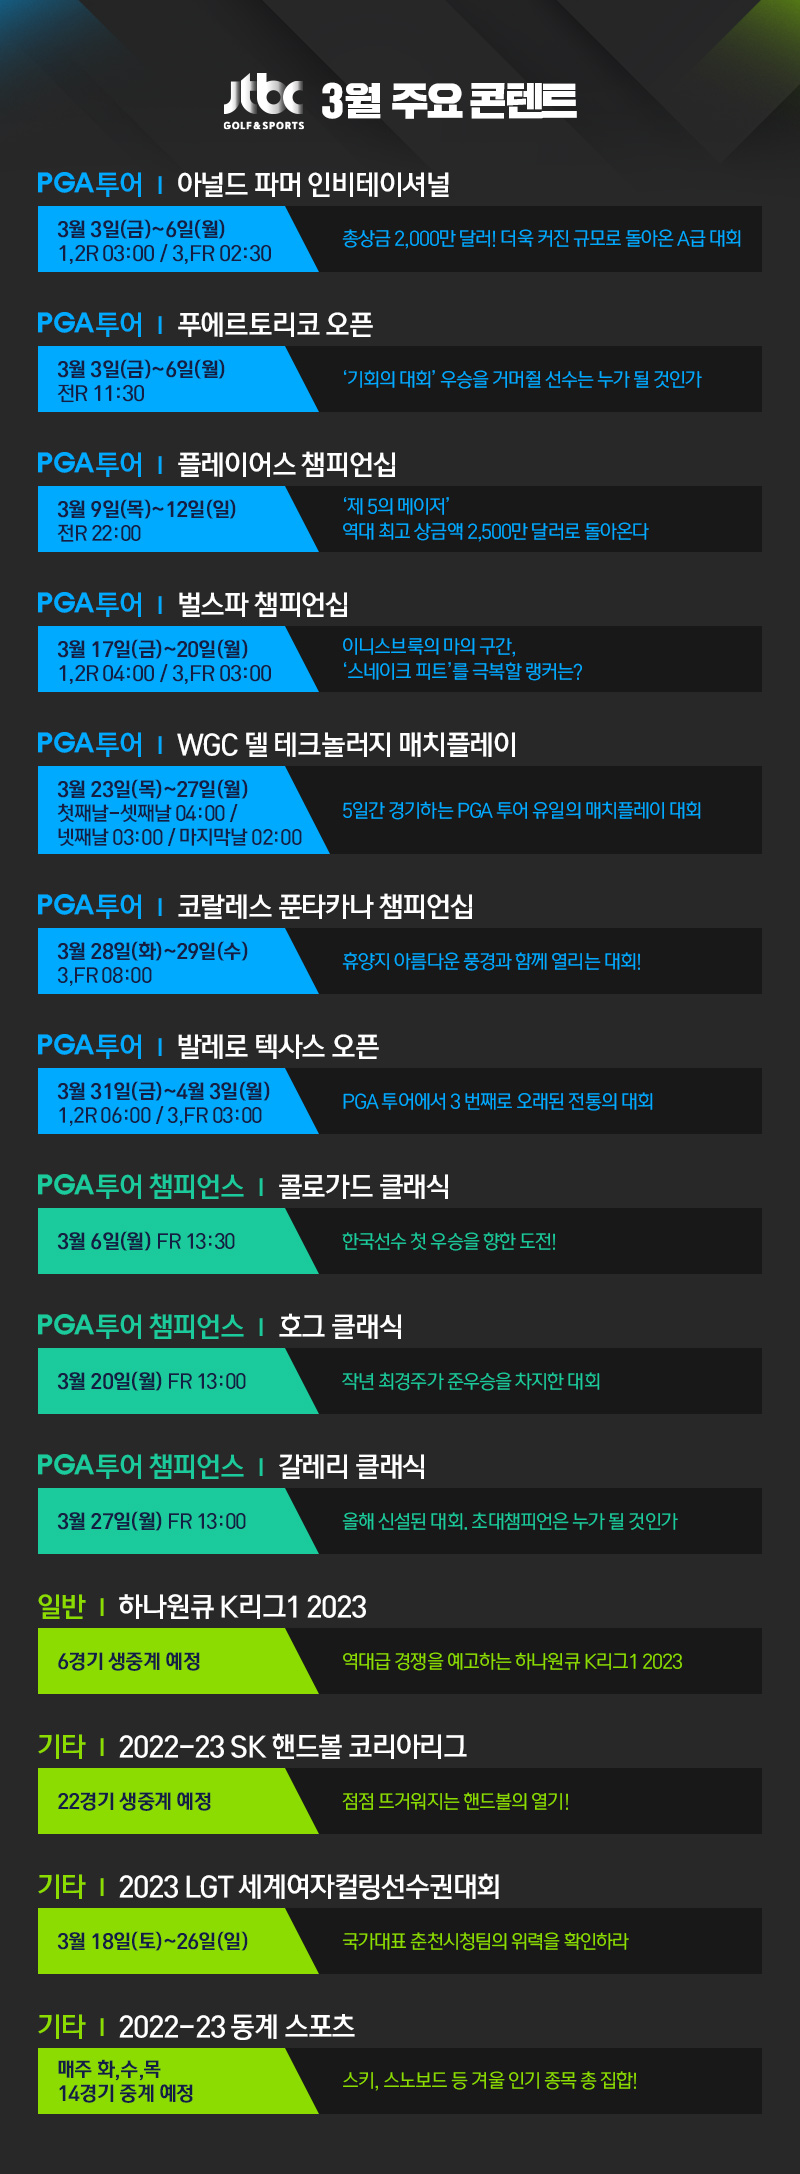 JTBC GOLF&SPORTS 3월 주요 콘텐트